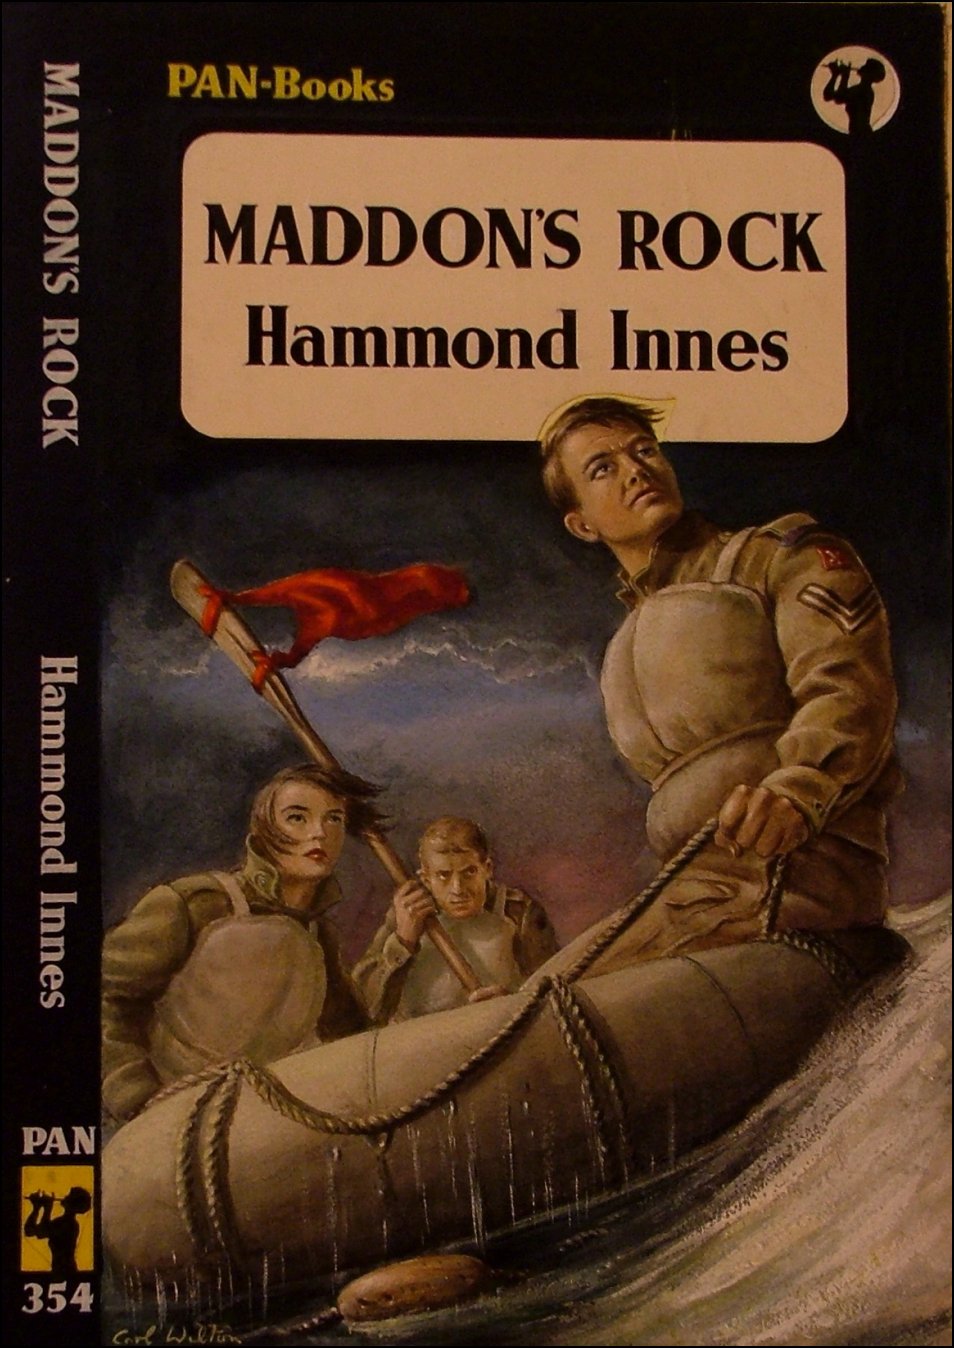 Maddons Rock